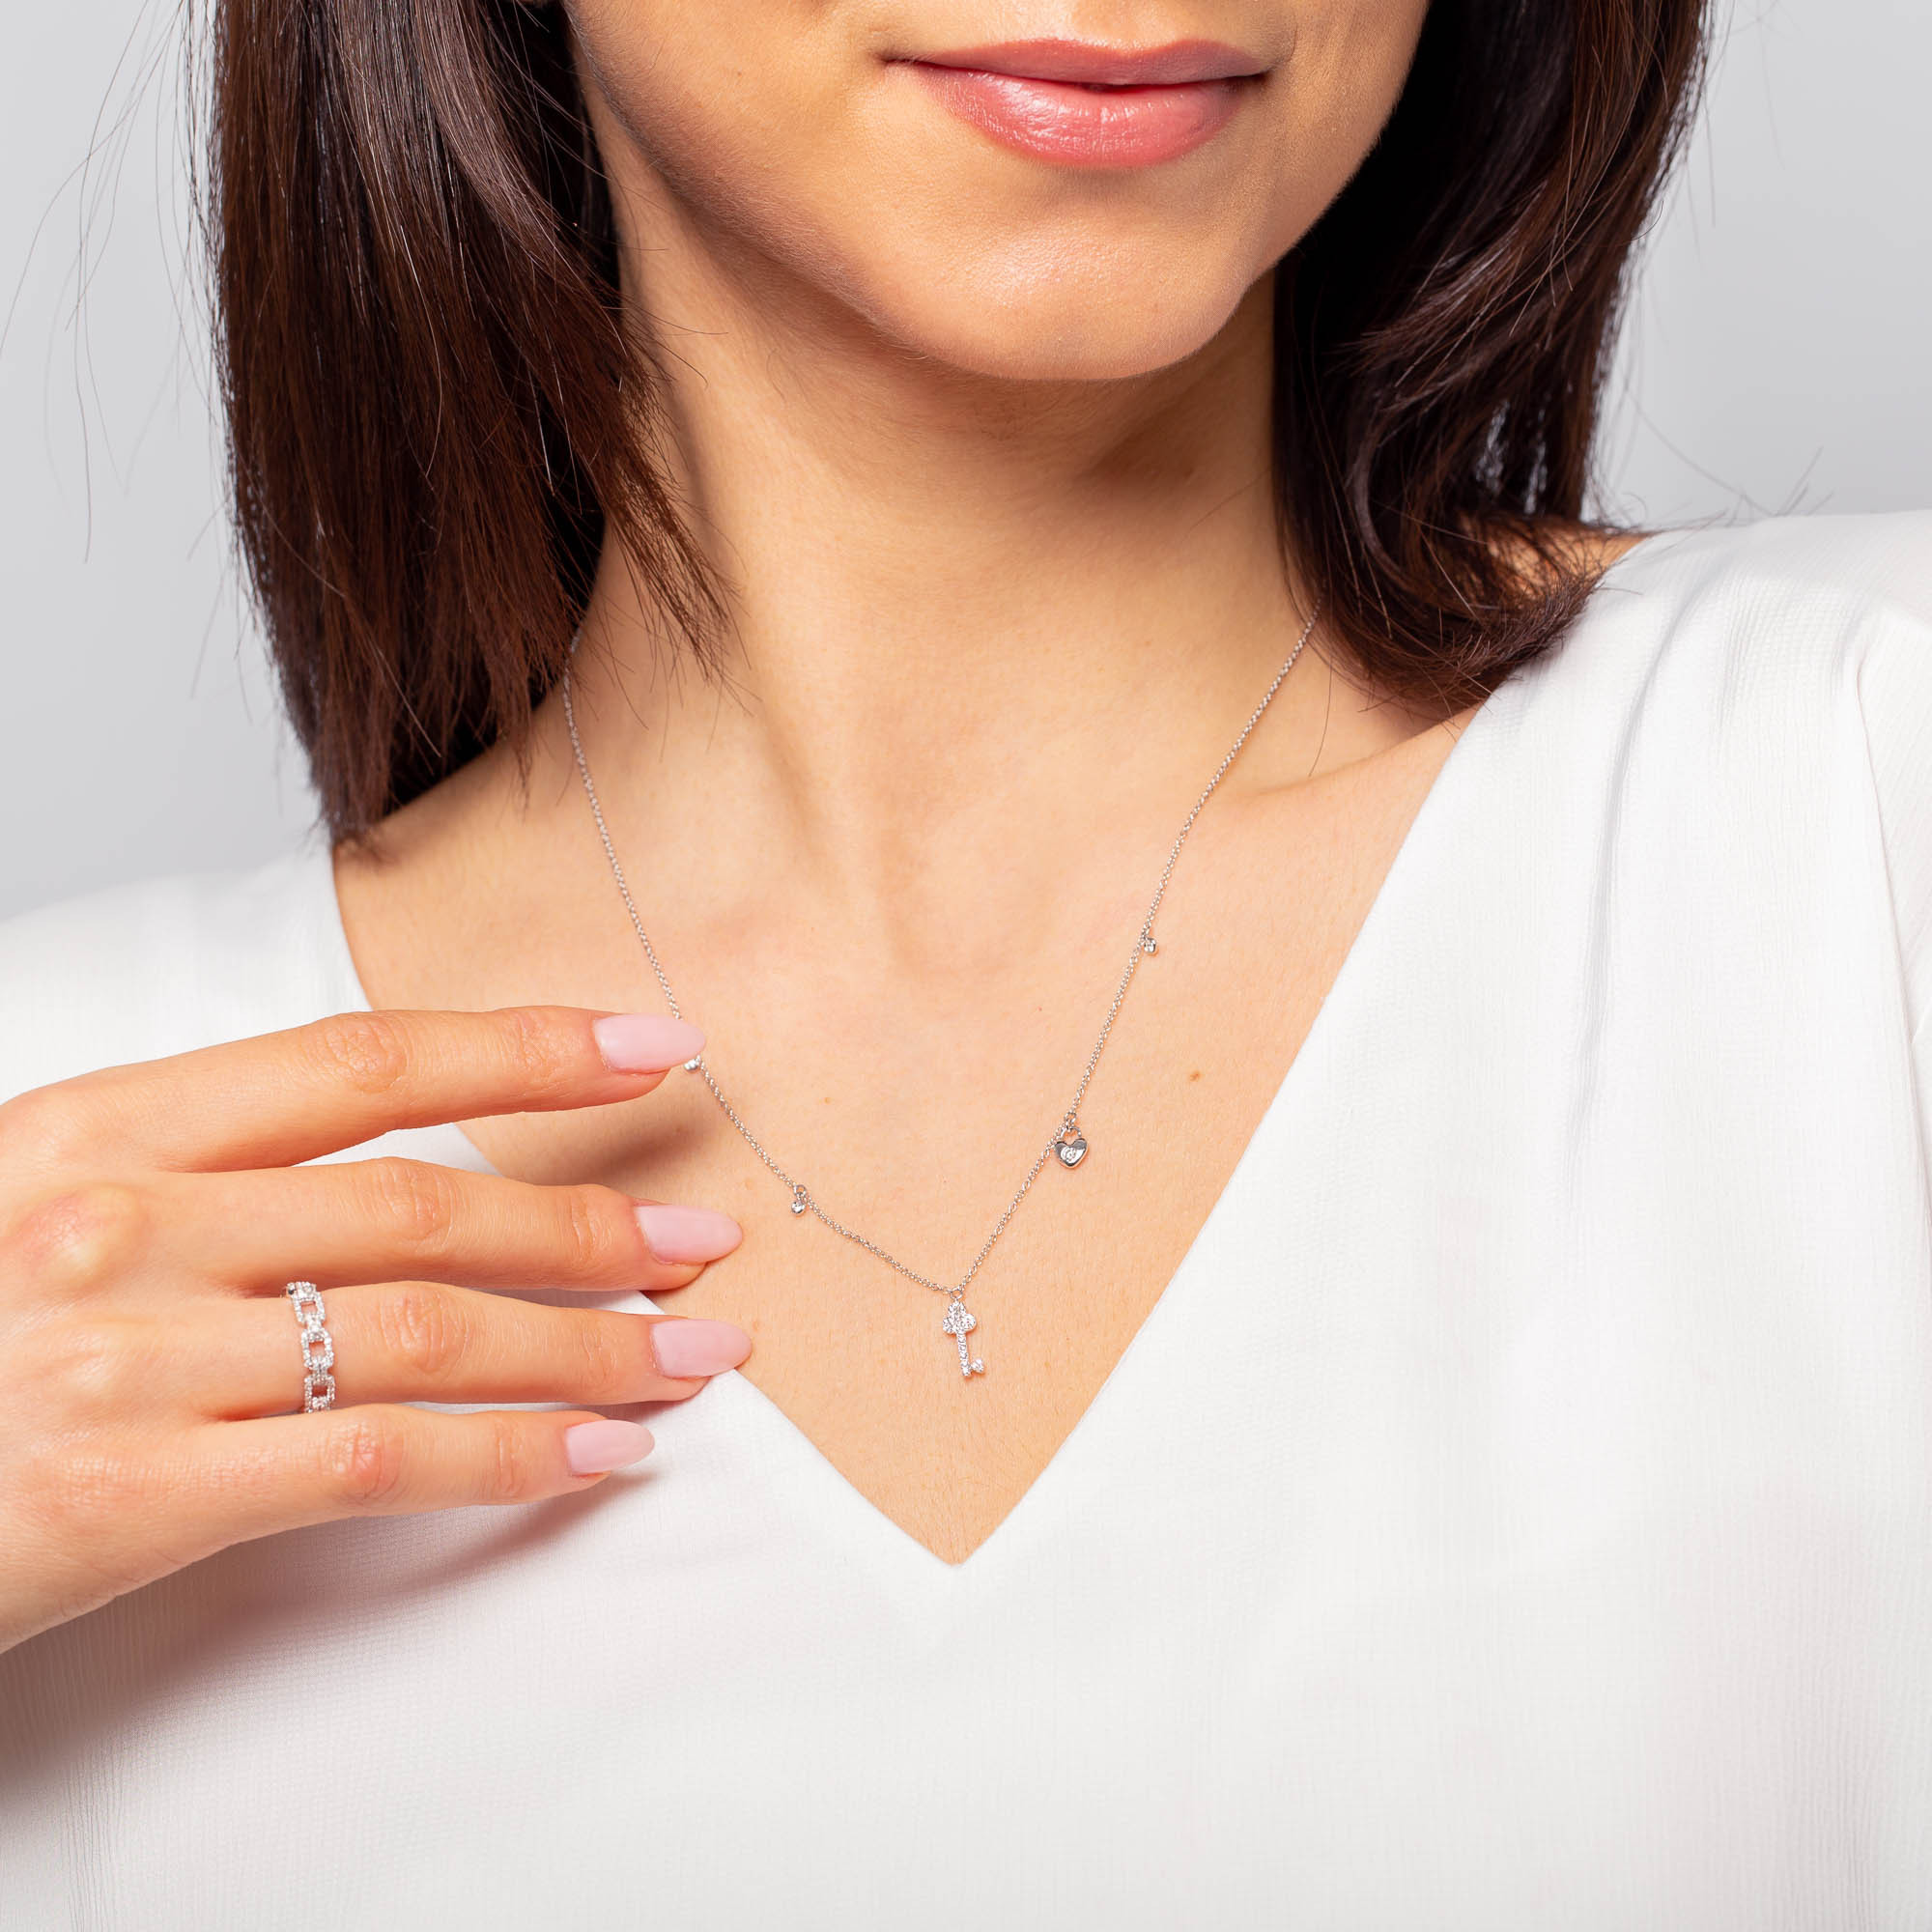 Diamond Key with Heart-Shape Lock Necklace | 18K White Gold 2